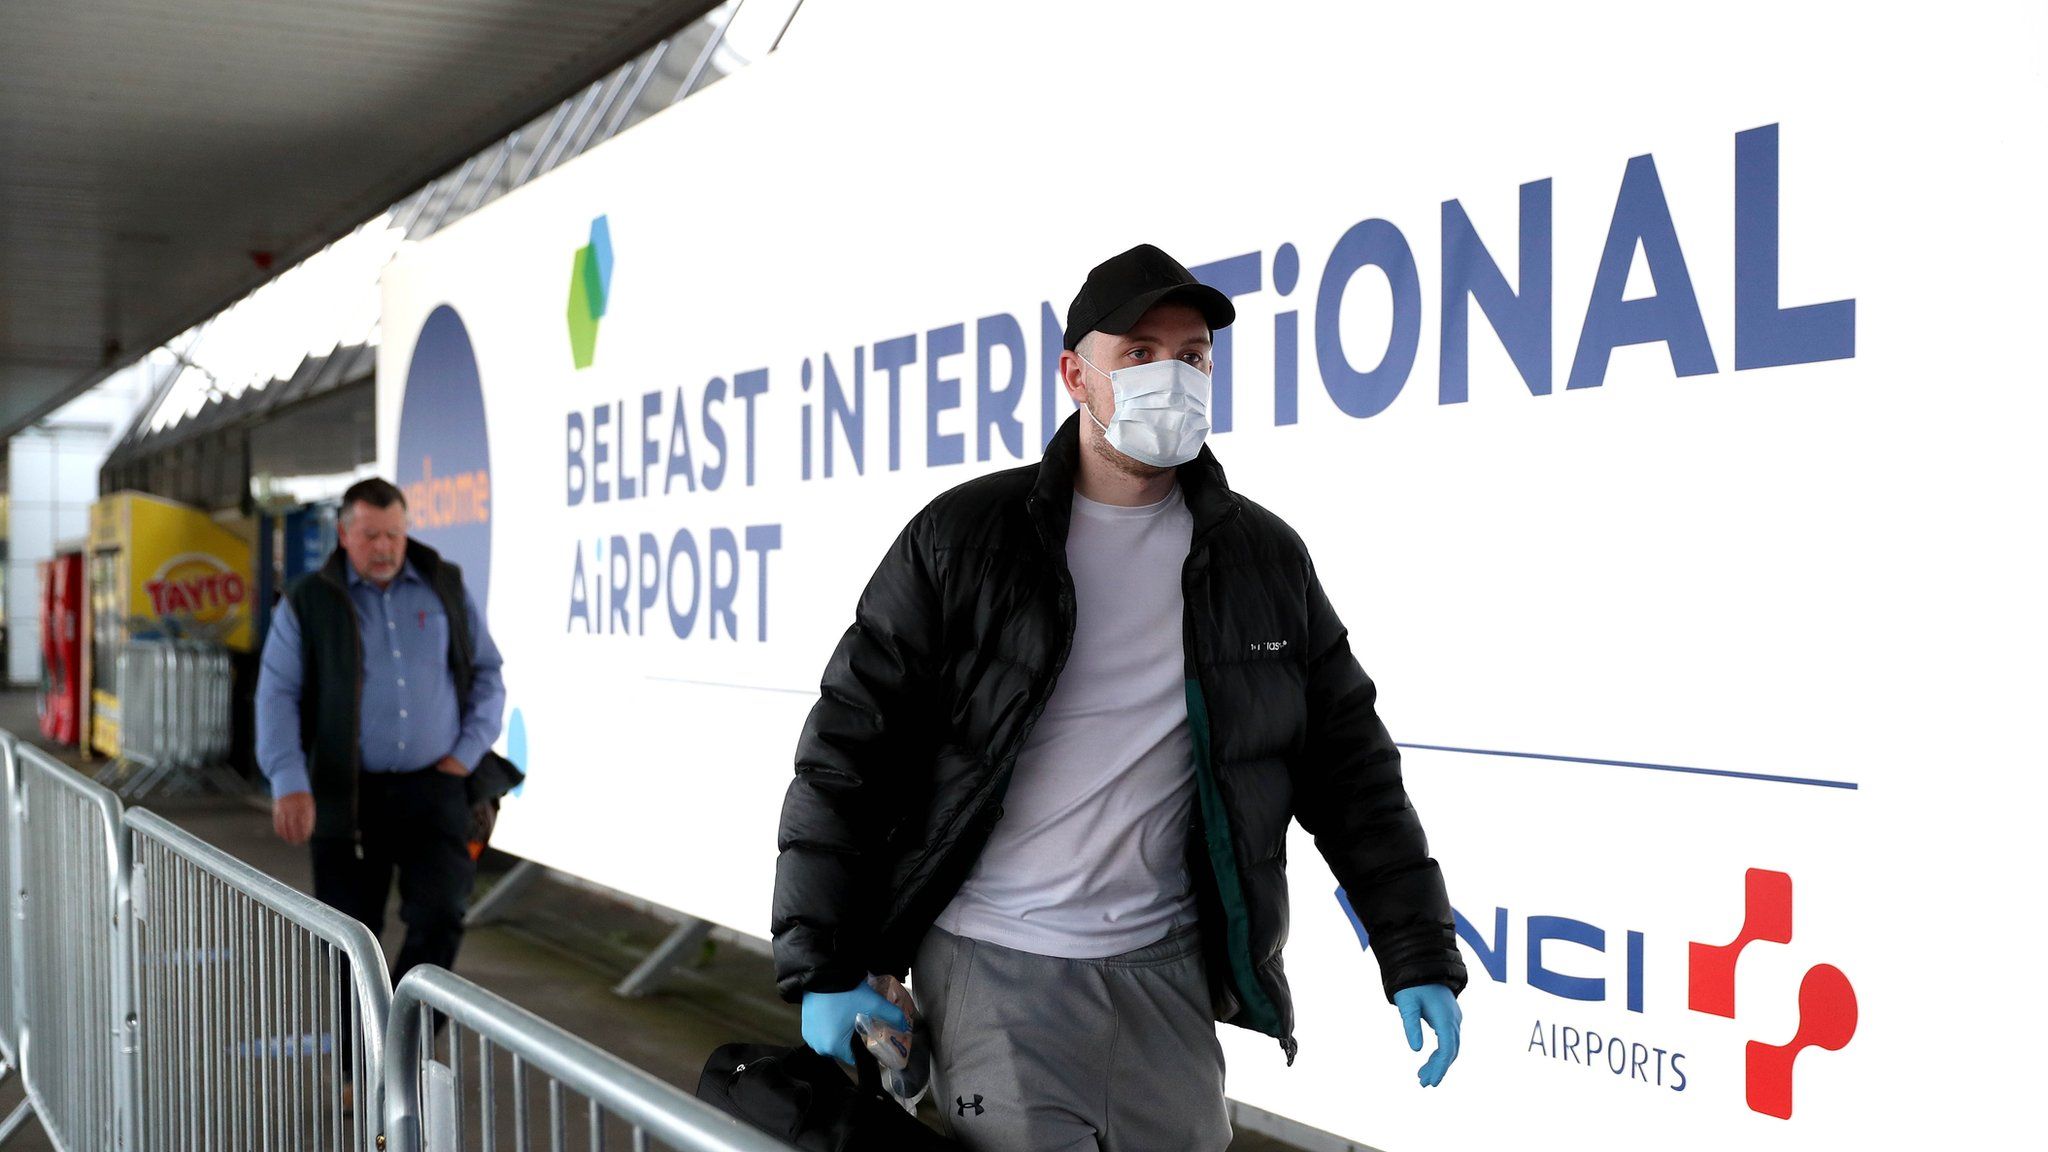 Arrivals at Belfast International Airport